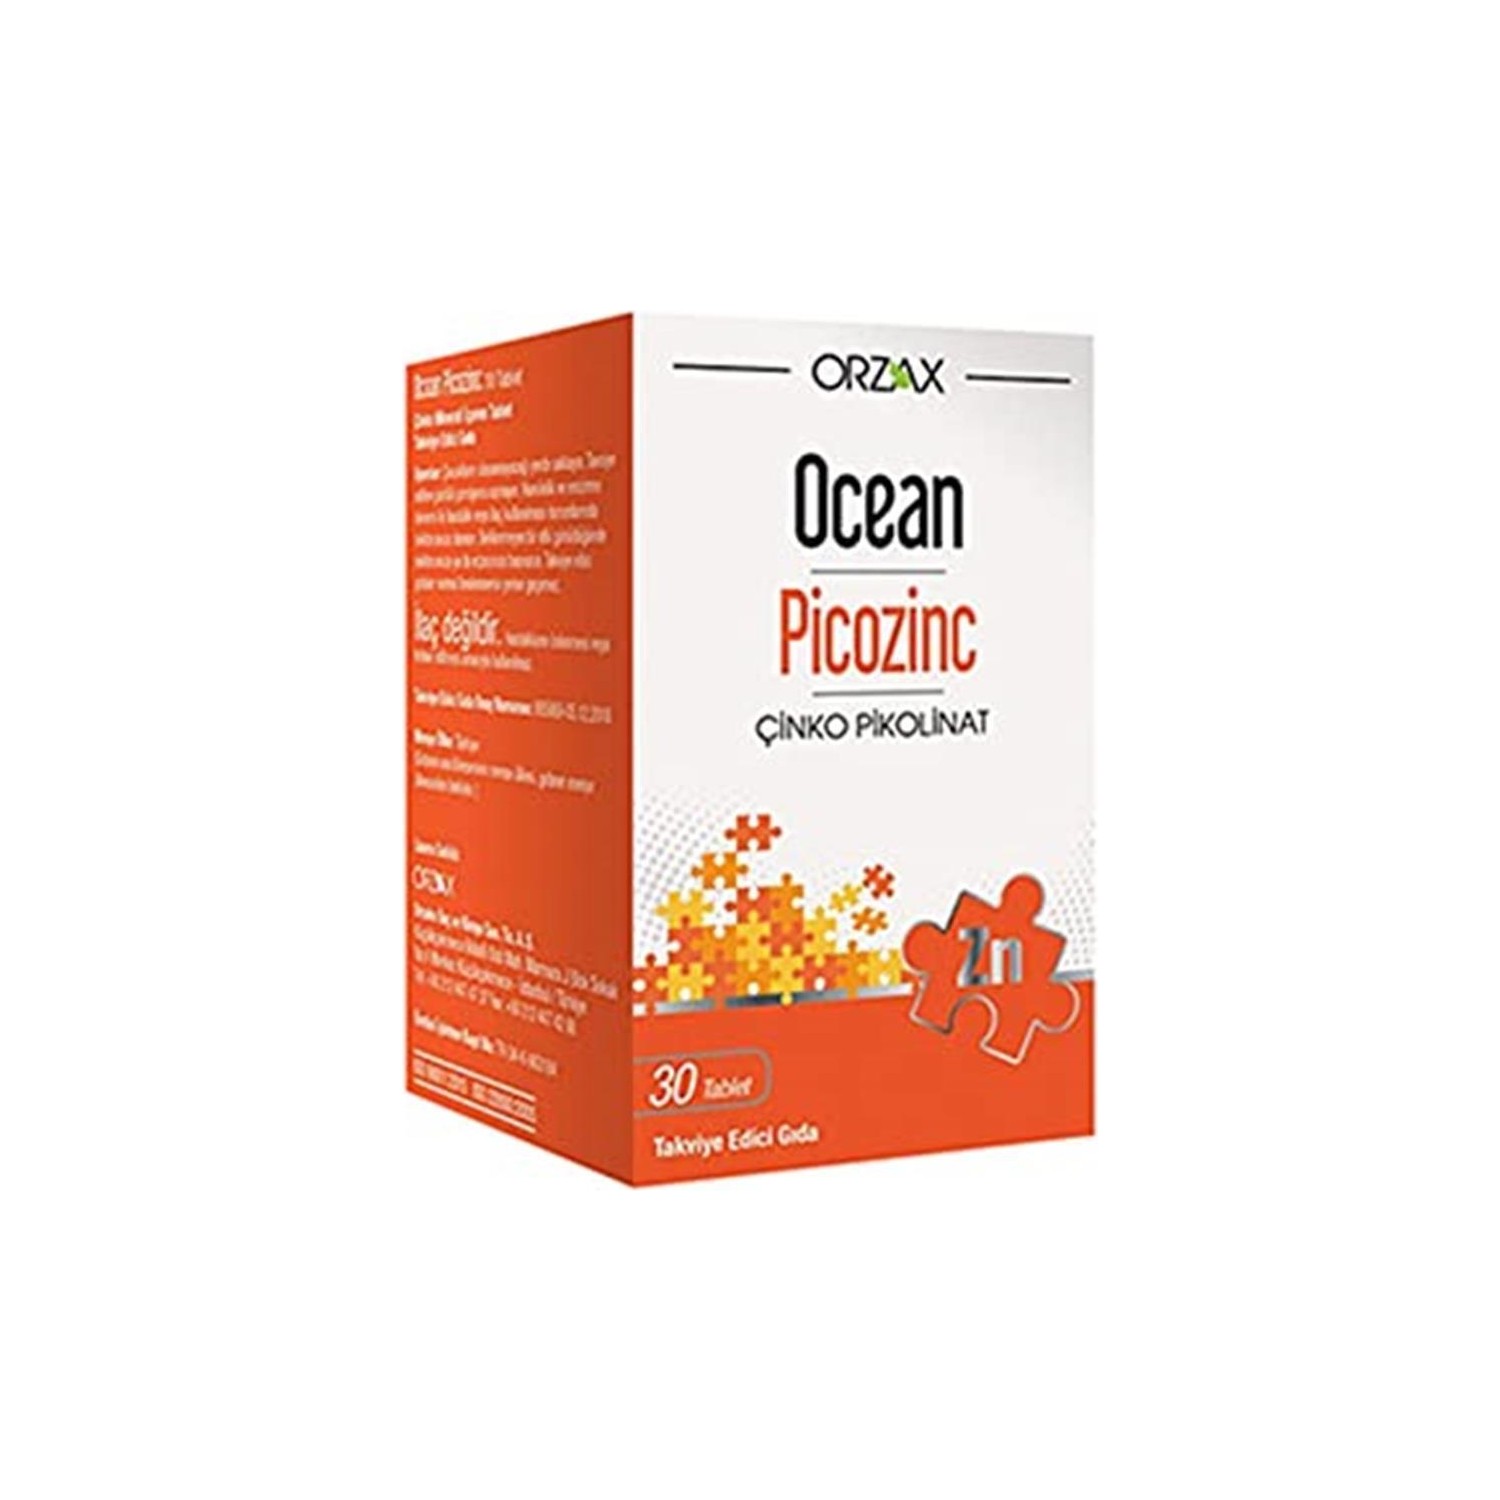 Пищевая добавка Ocean Picozinc Cinko, 30 таблеток пищевая добавка orzax ocean picozinc cinko picolinate 2 упаковки по 30 таблеток